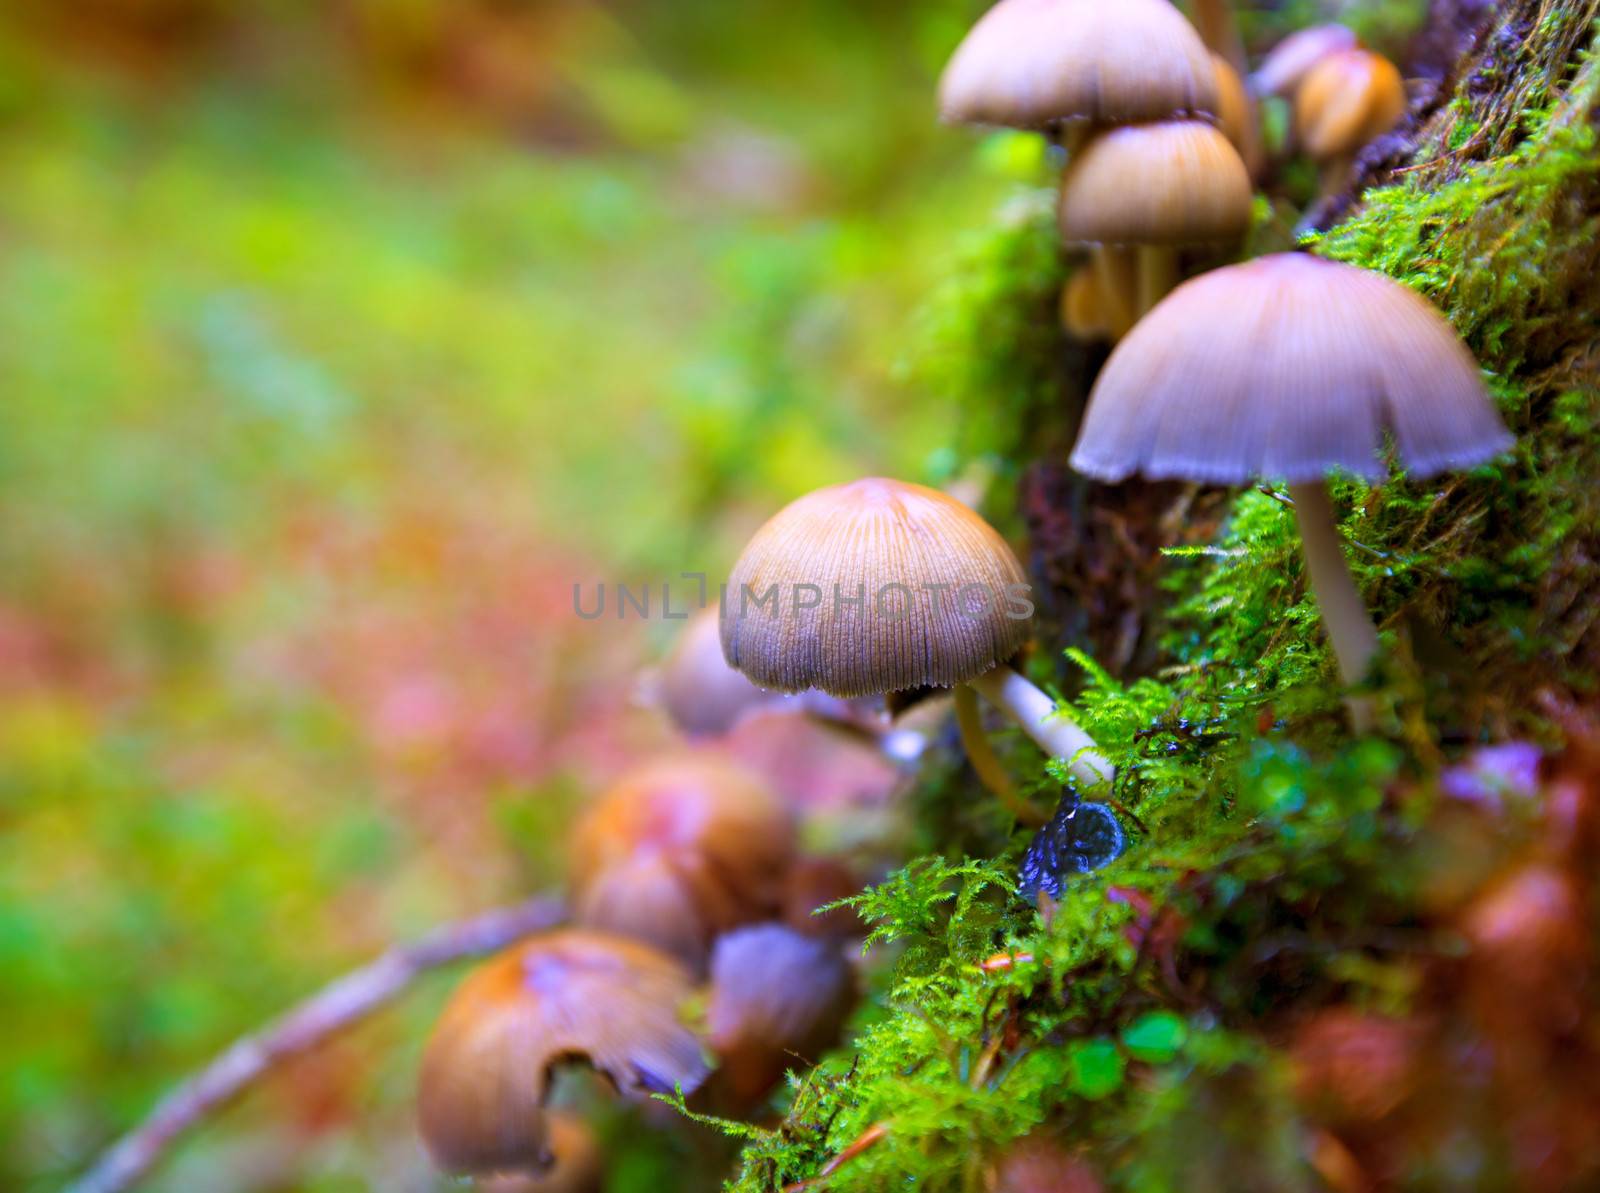 Psilocybe mushrooms in a beech tree trunk at Irati Pyrenees by lunamarina